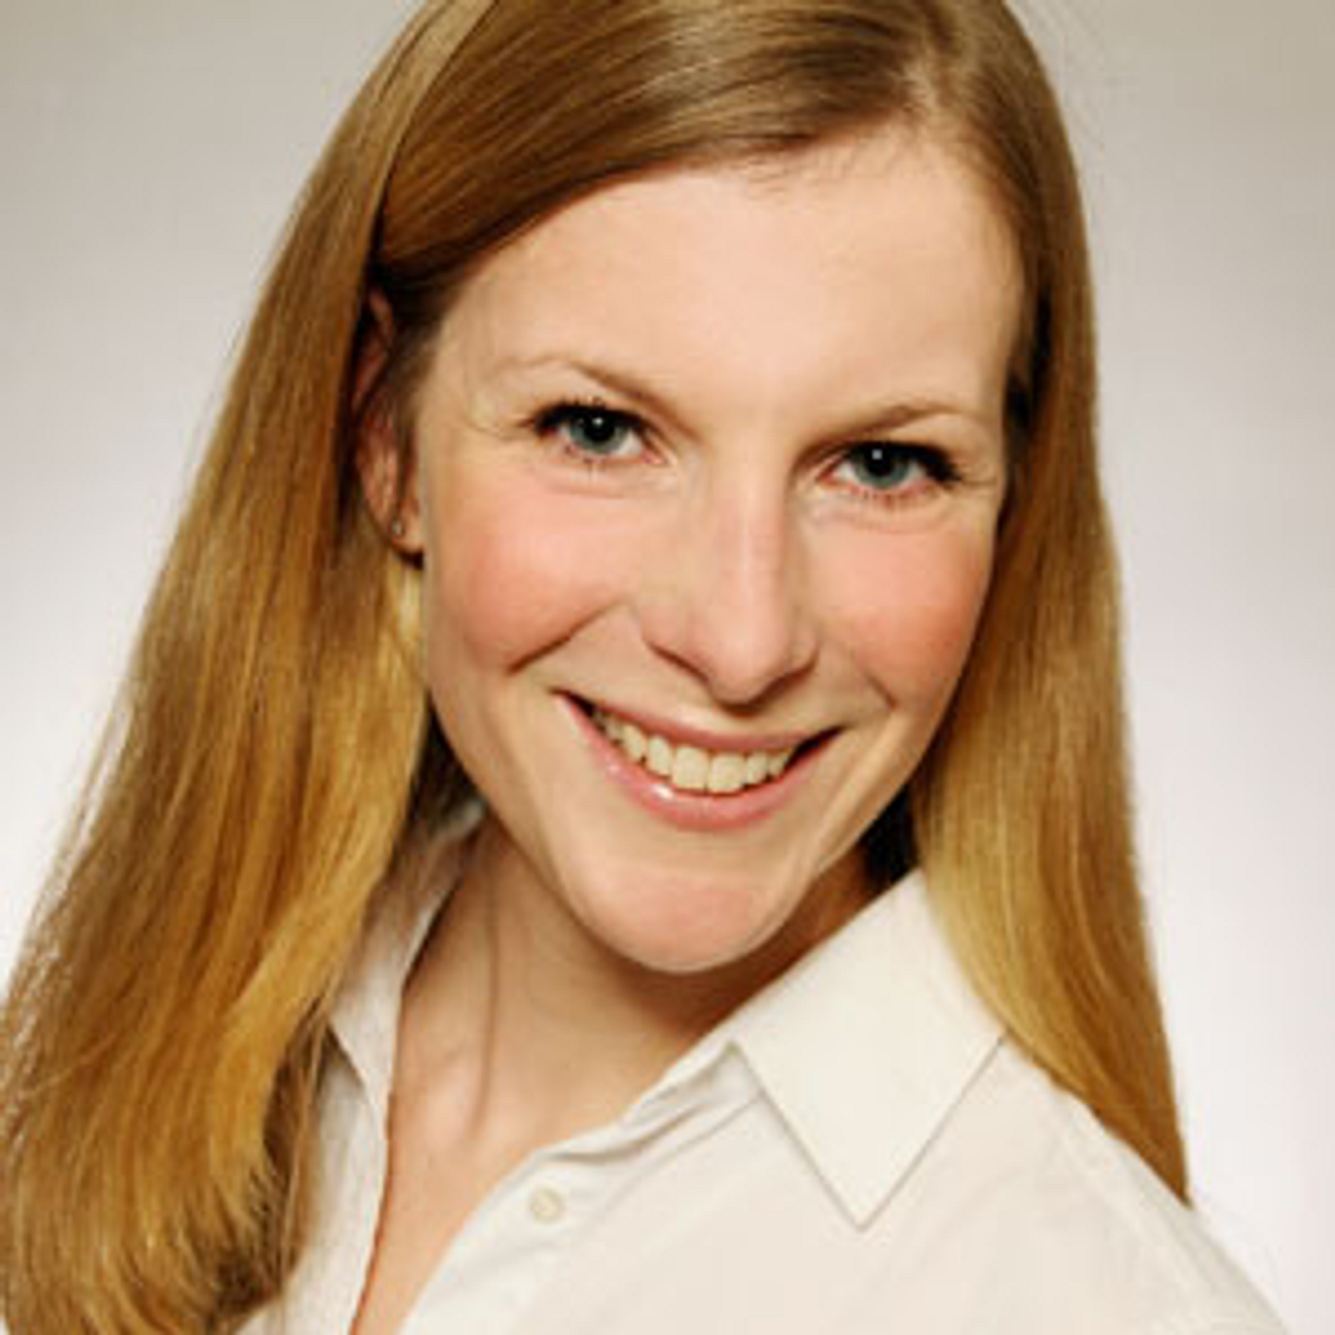 Kinderärztin Dr. Nadine Hess gibt Rat zu Nasenbluten bei Kindern